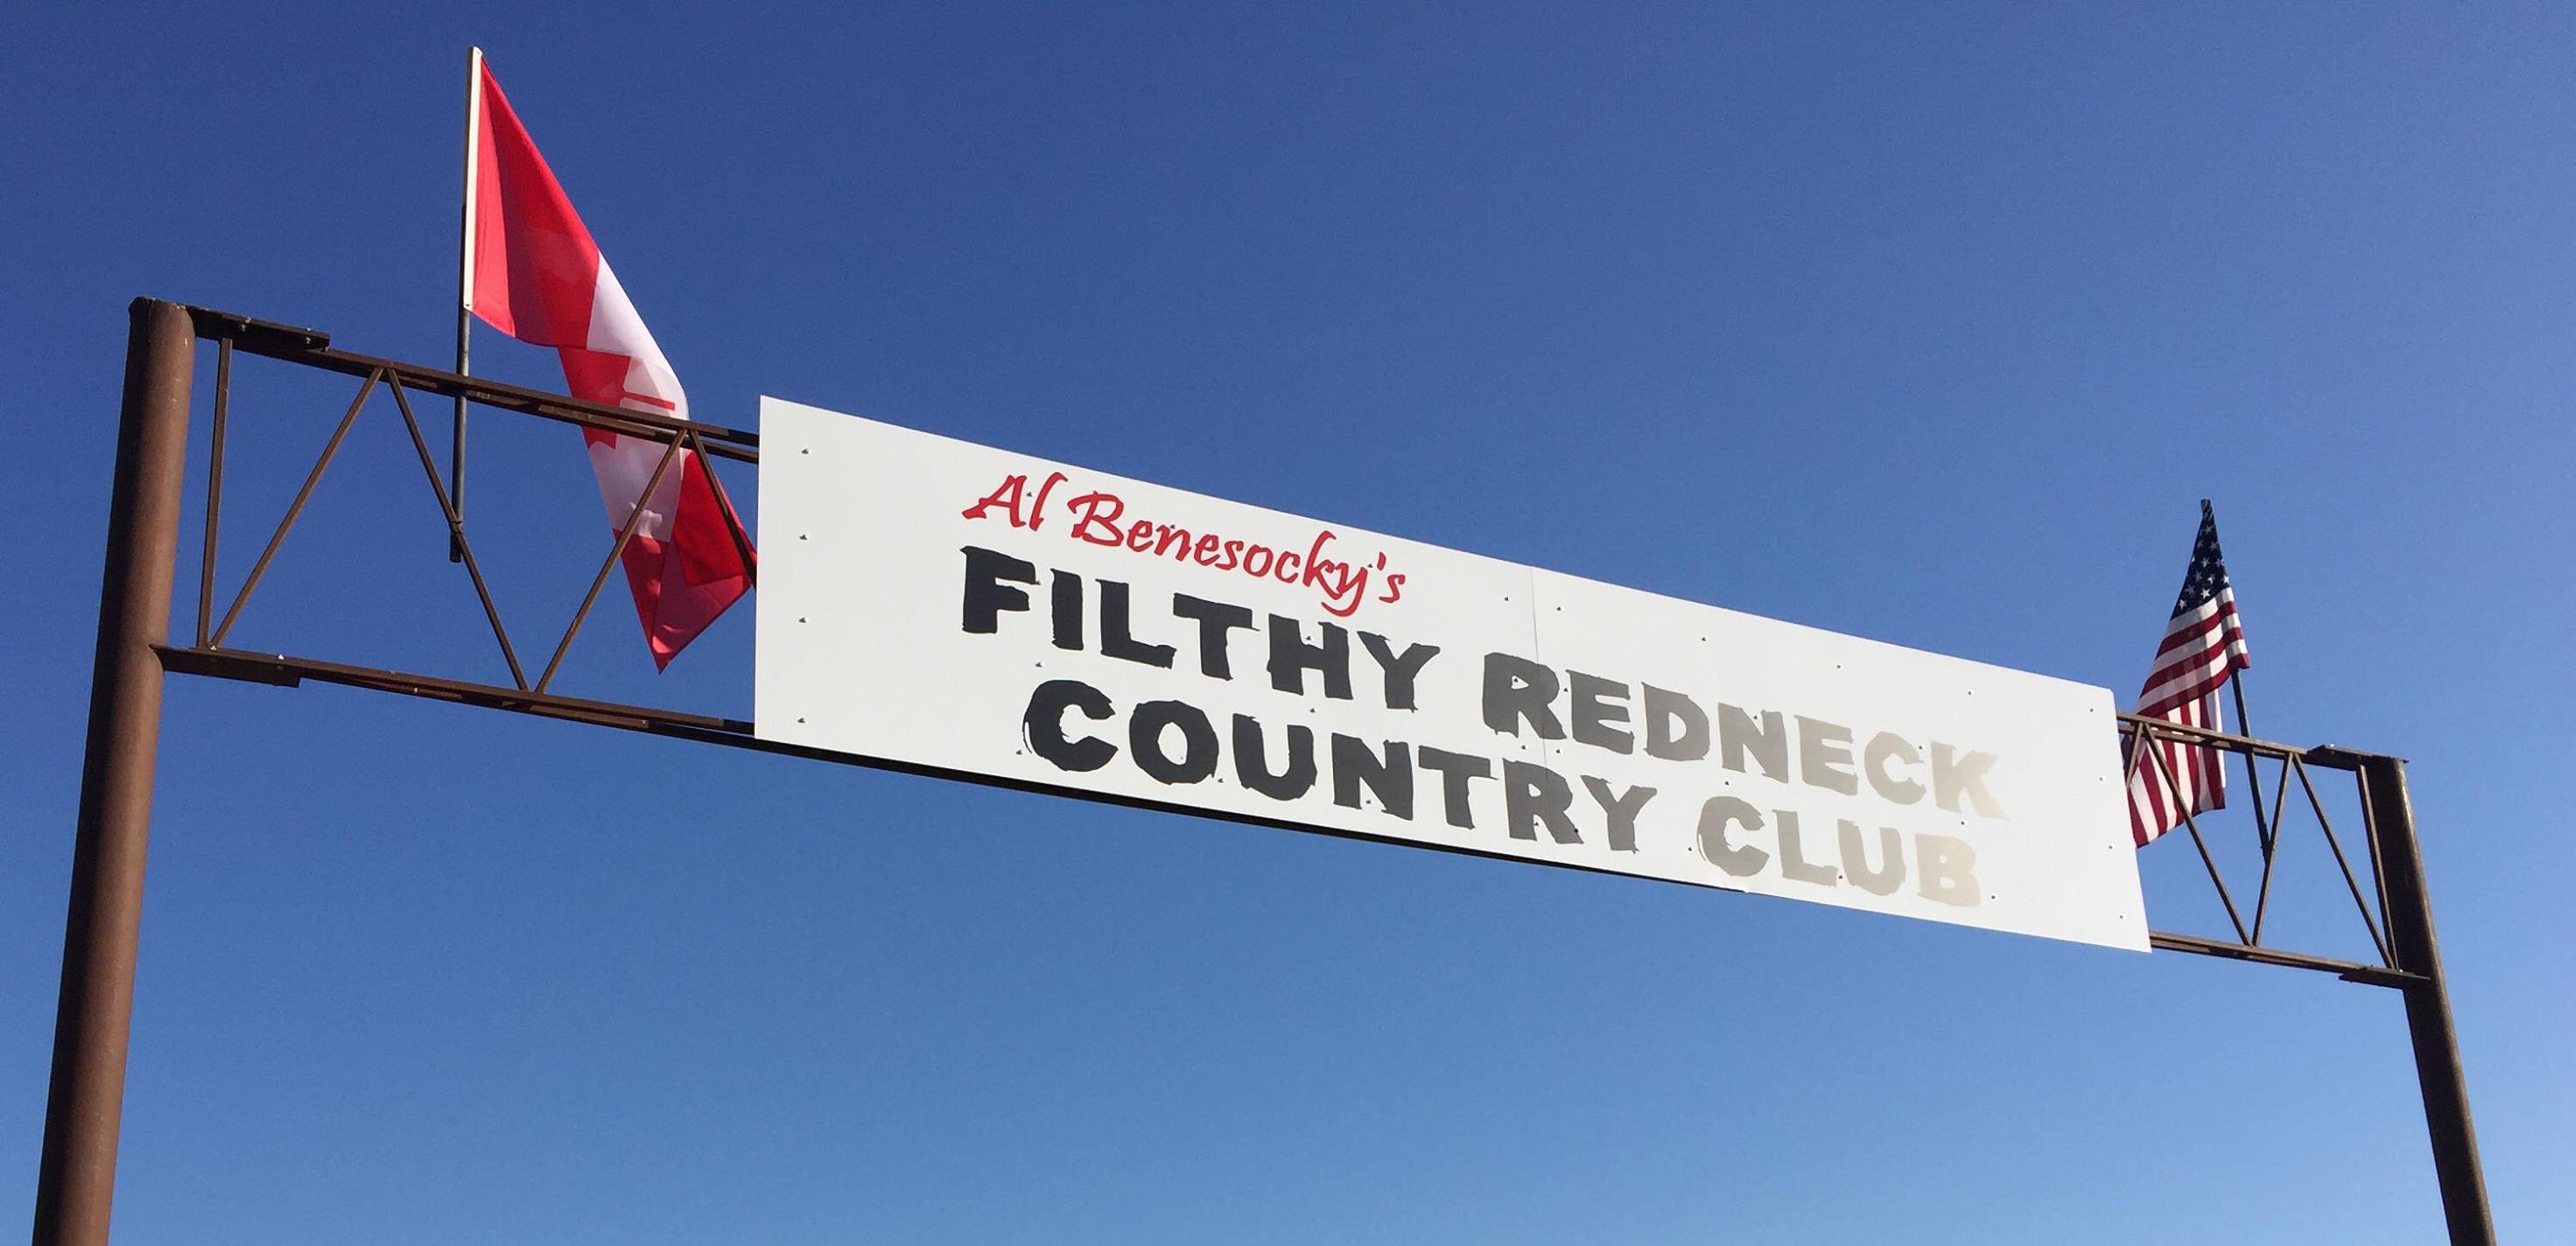 Al Benesocky's Filthy Redneck Country Club